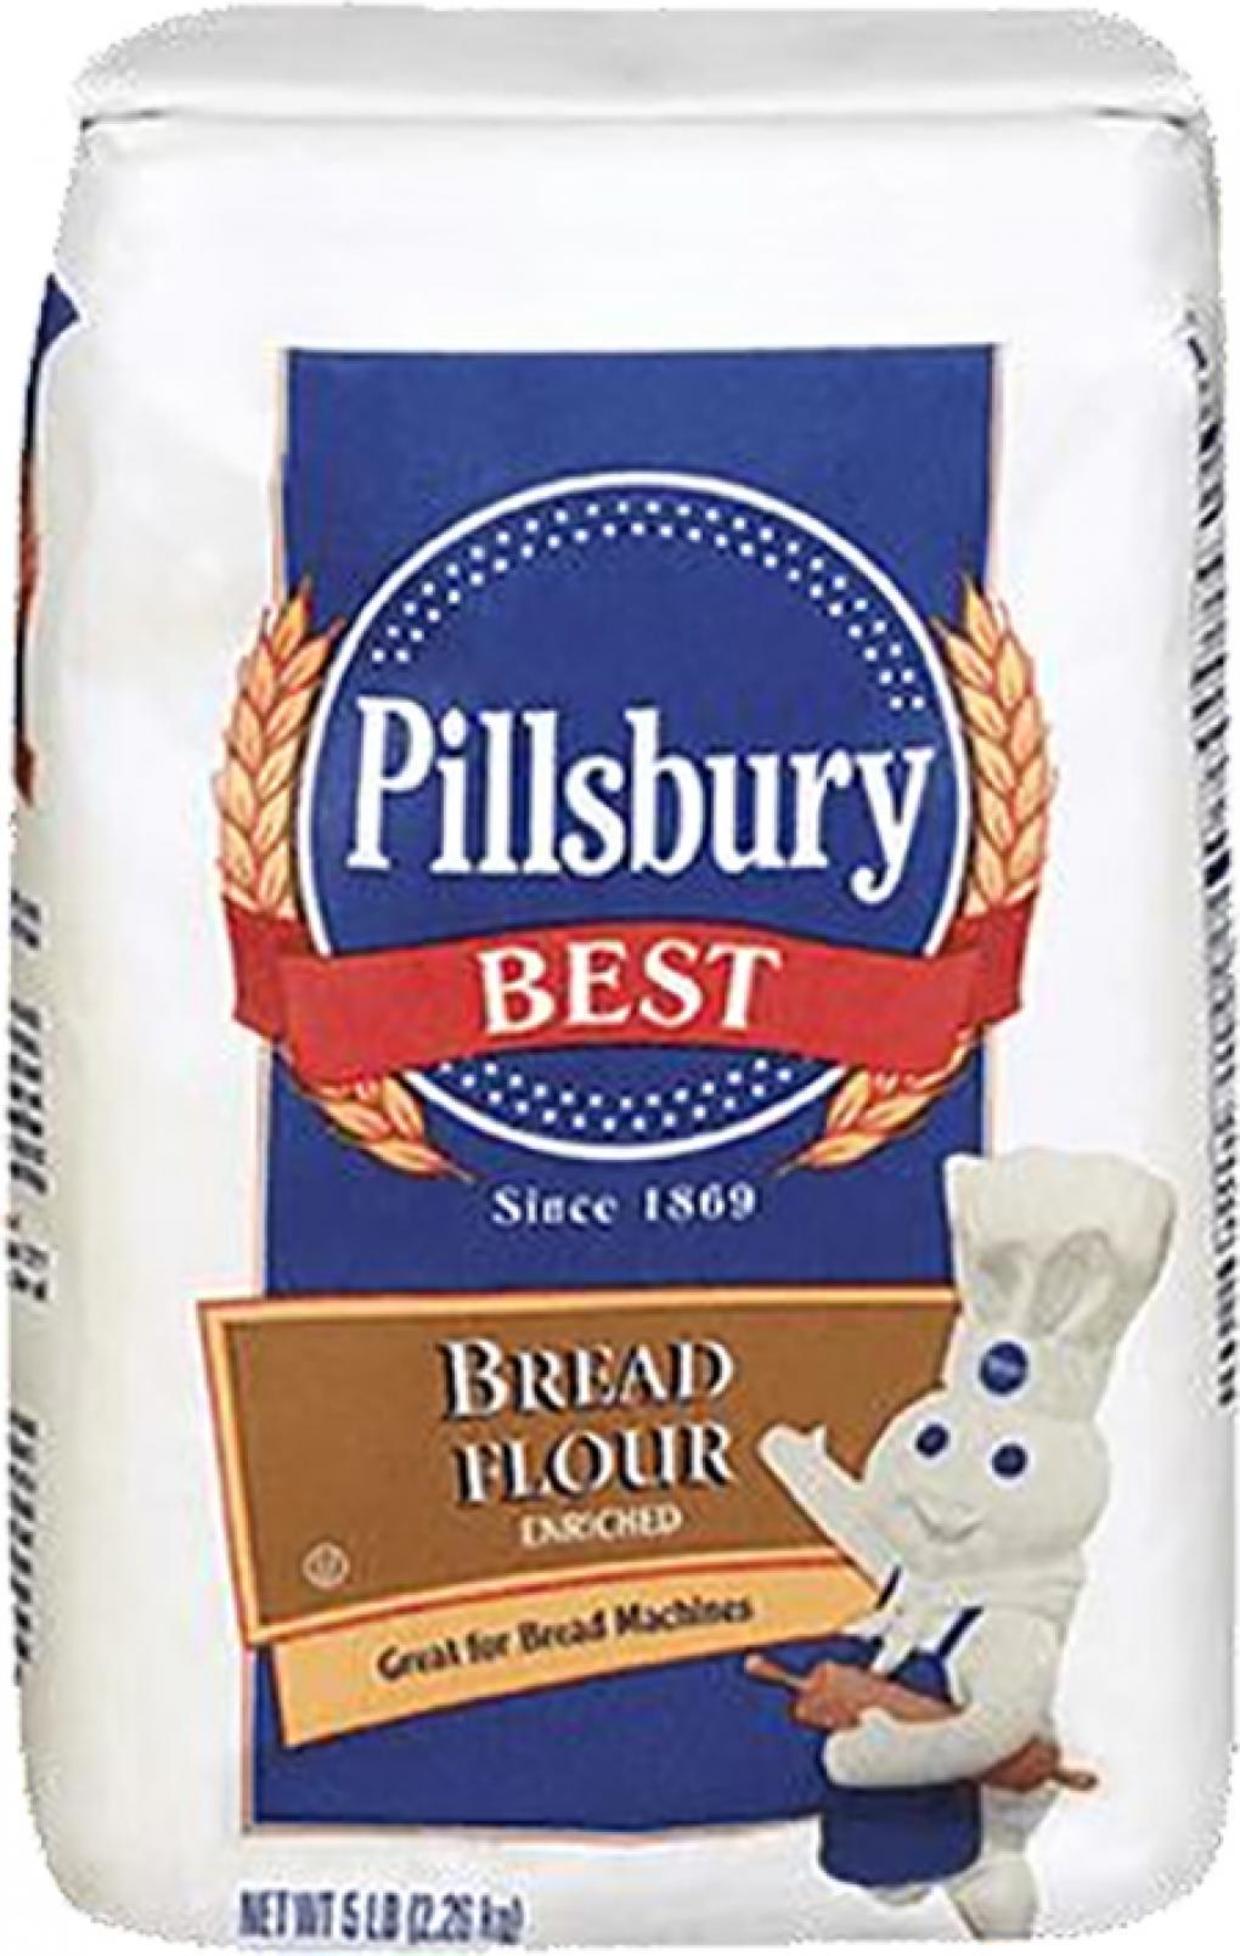 Pillsbury flour recall Another major flour brand added to recall list